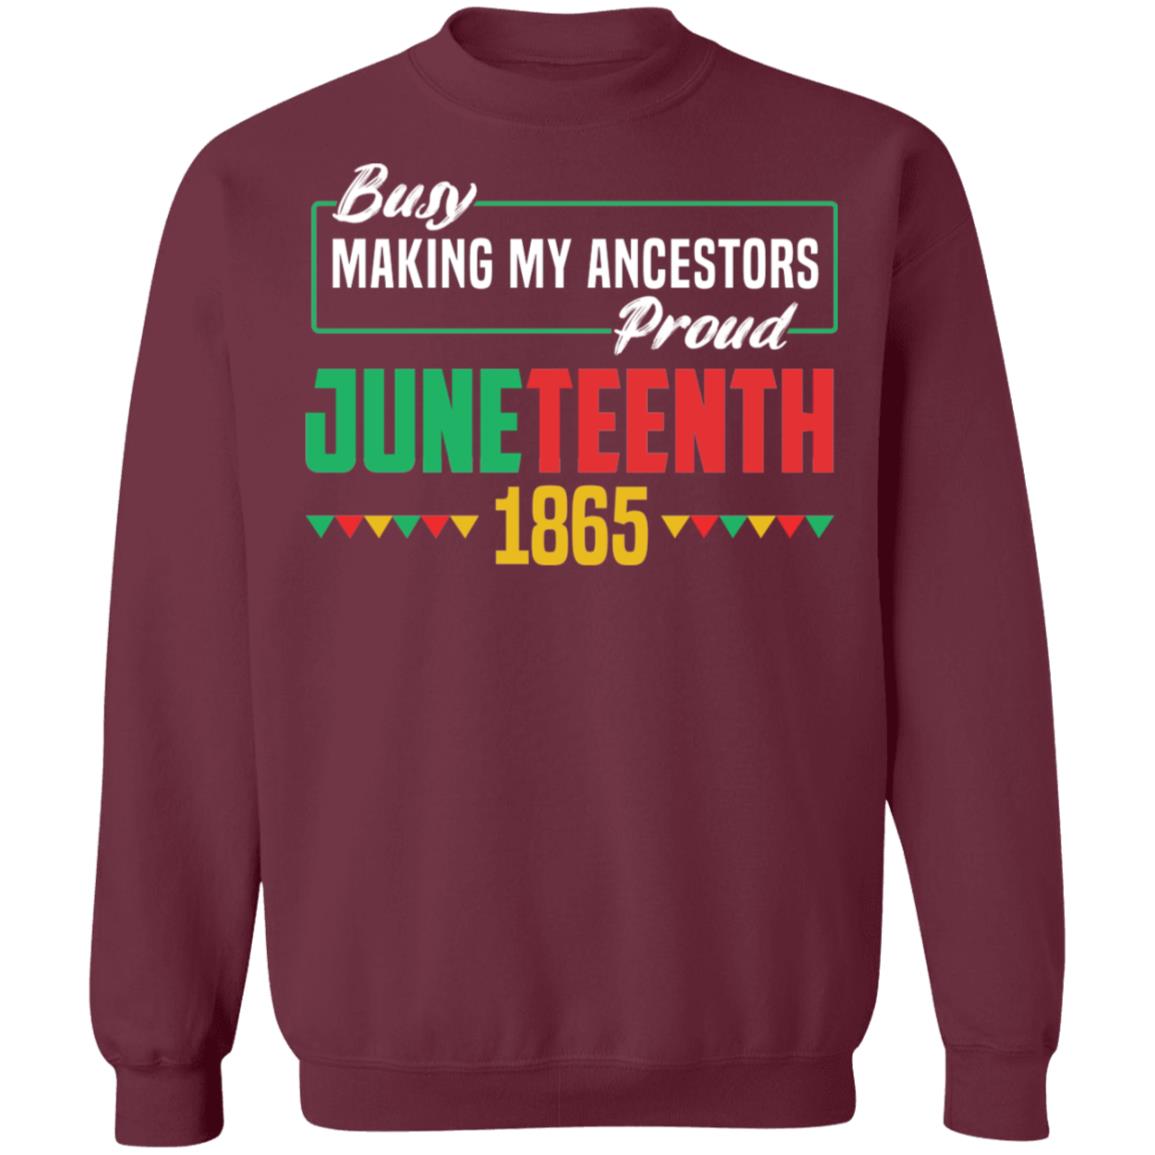 Busy Making My Ancestors Proud - Juneteenth T-shirt Apparel Gearment Crewneck Sweatshirt Maroon S